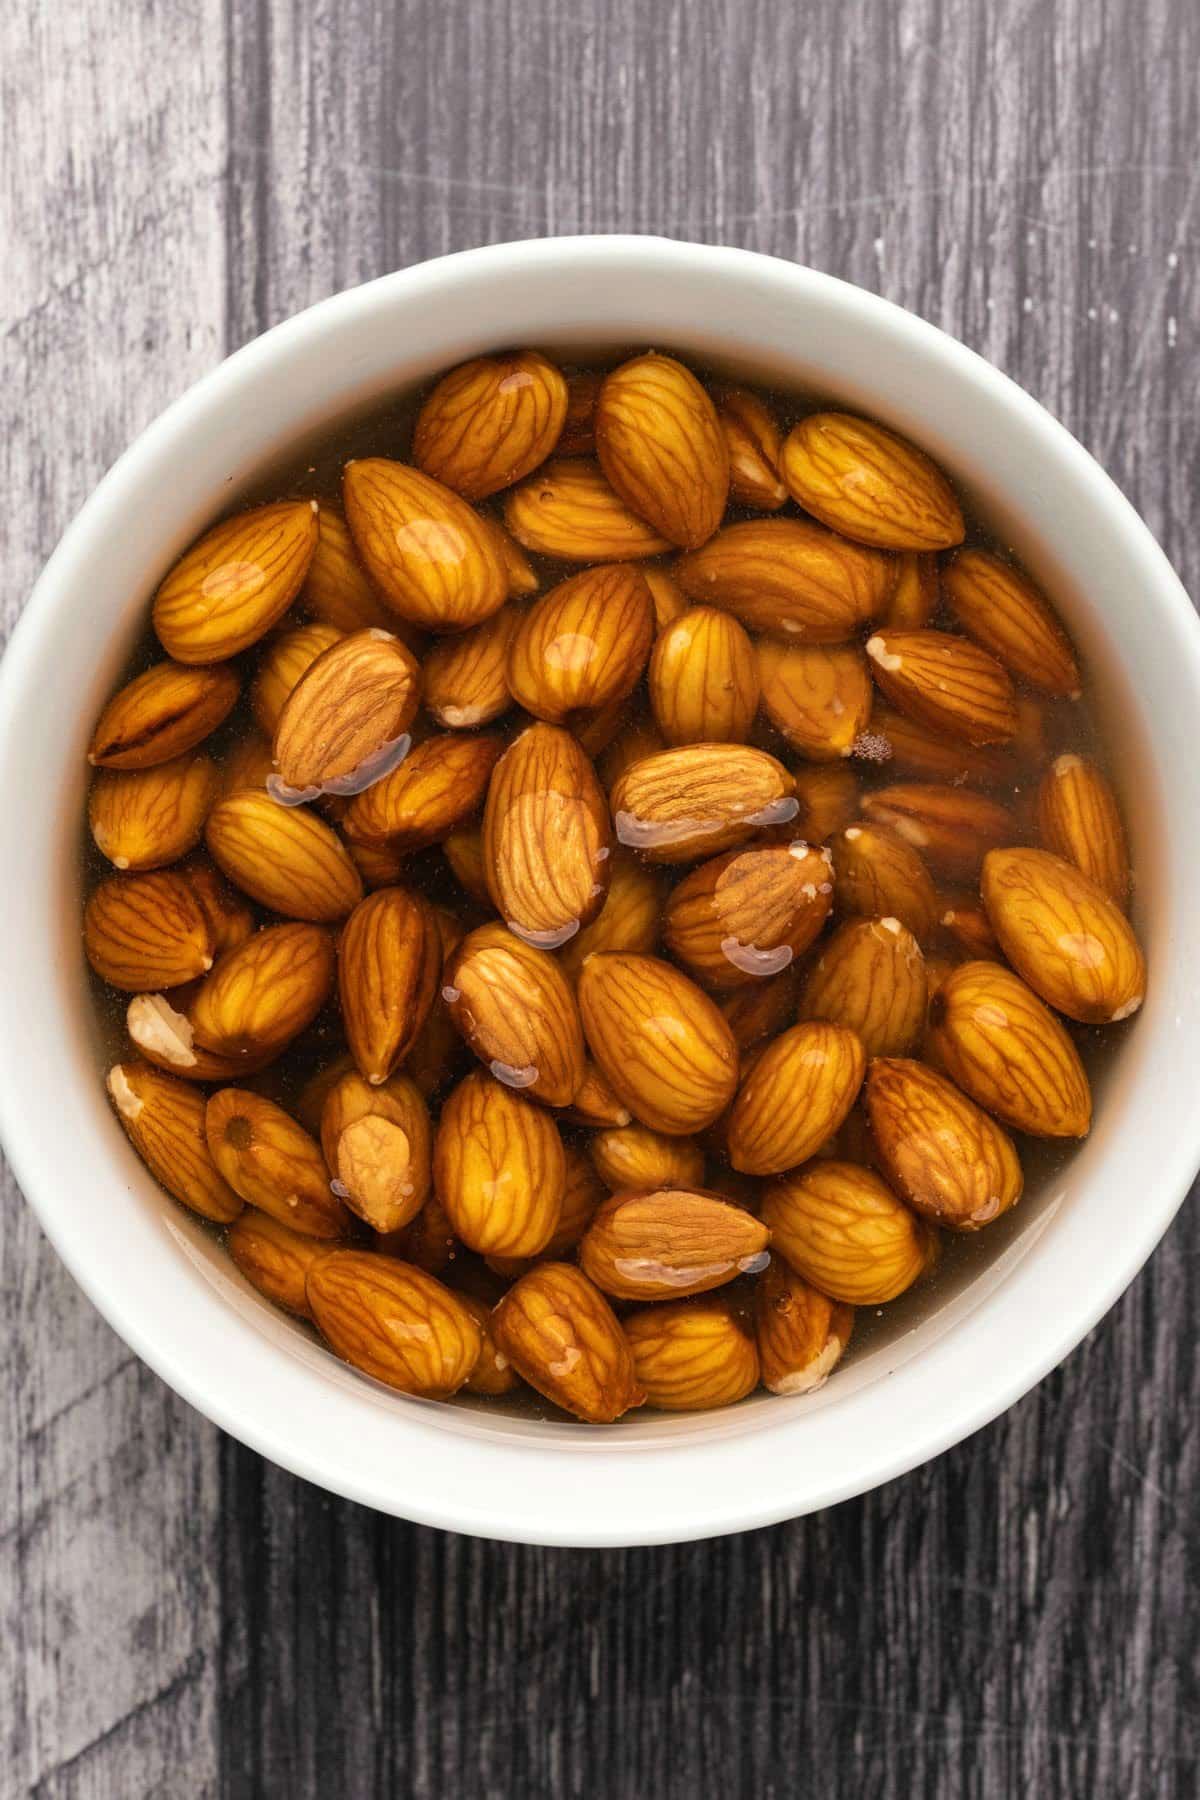 Almonds soaking in water in a bowl. 